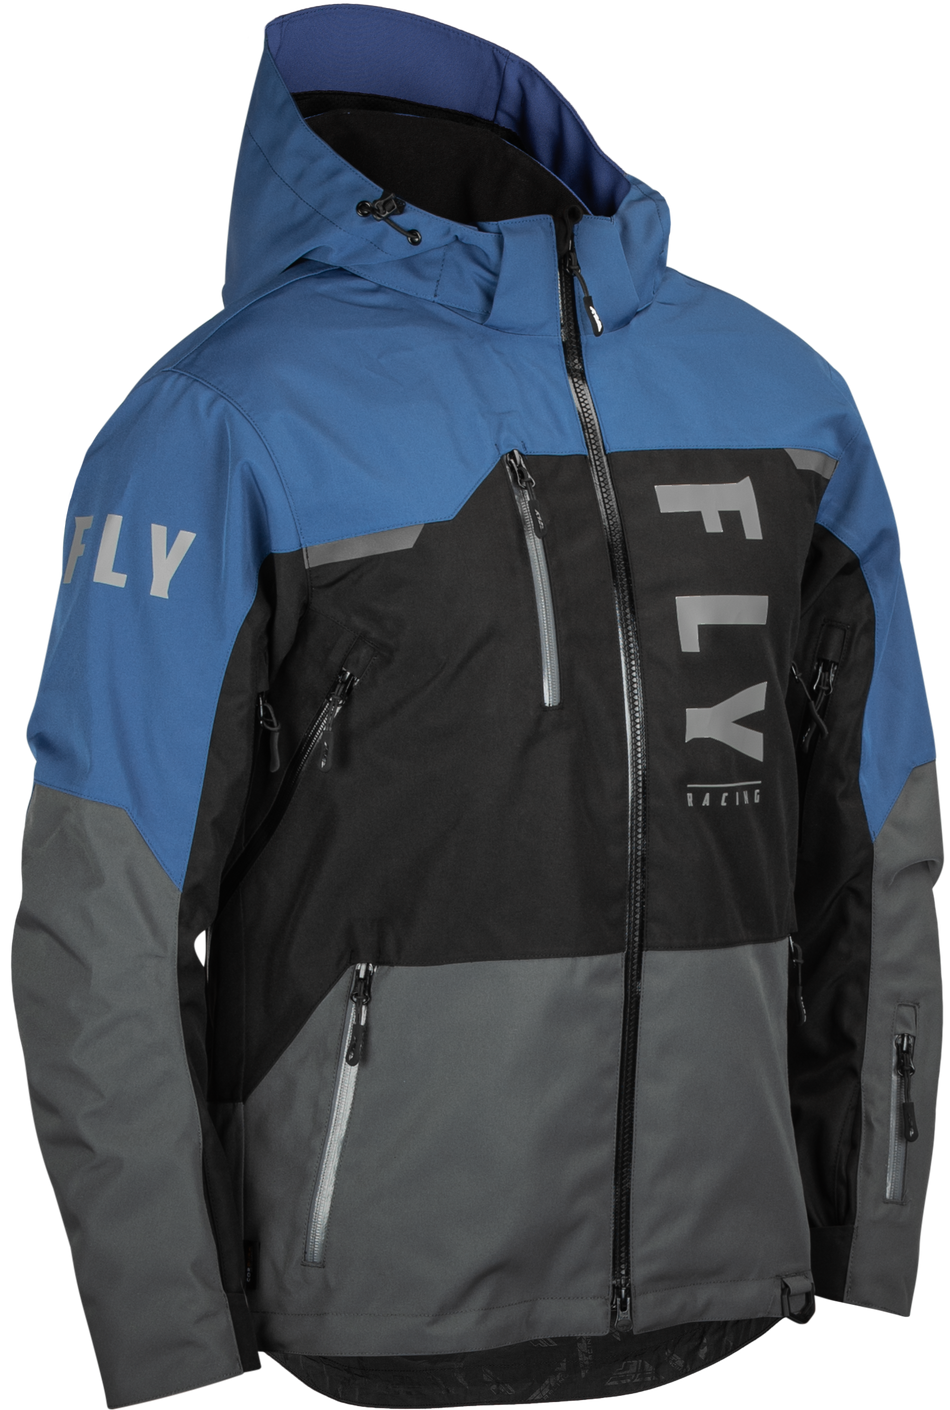 FLY RACING Carbon Jacket Black/Grey/Blue Lg 470-5202L